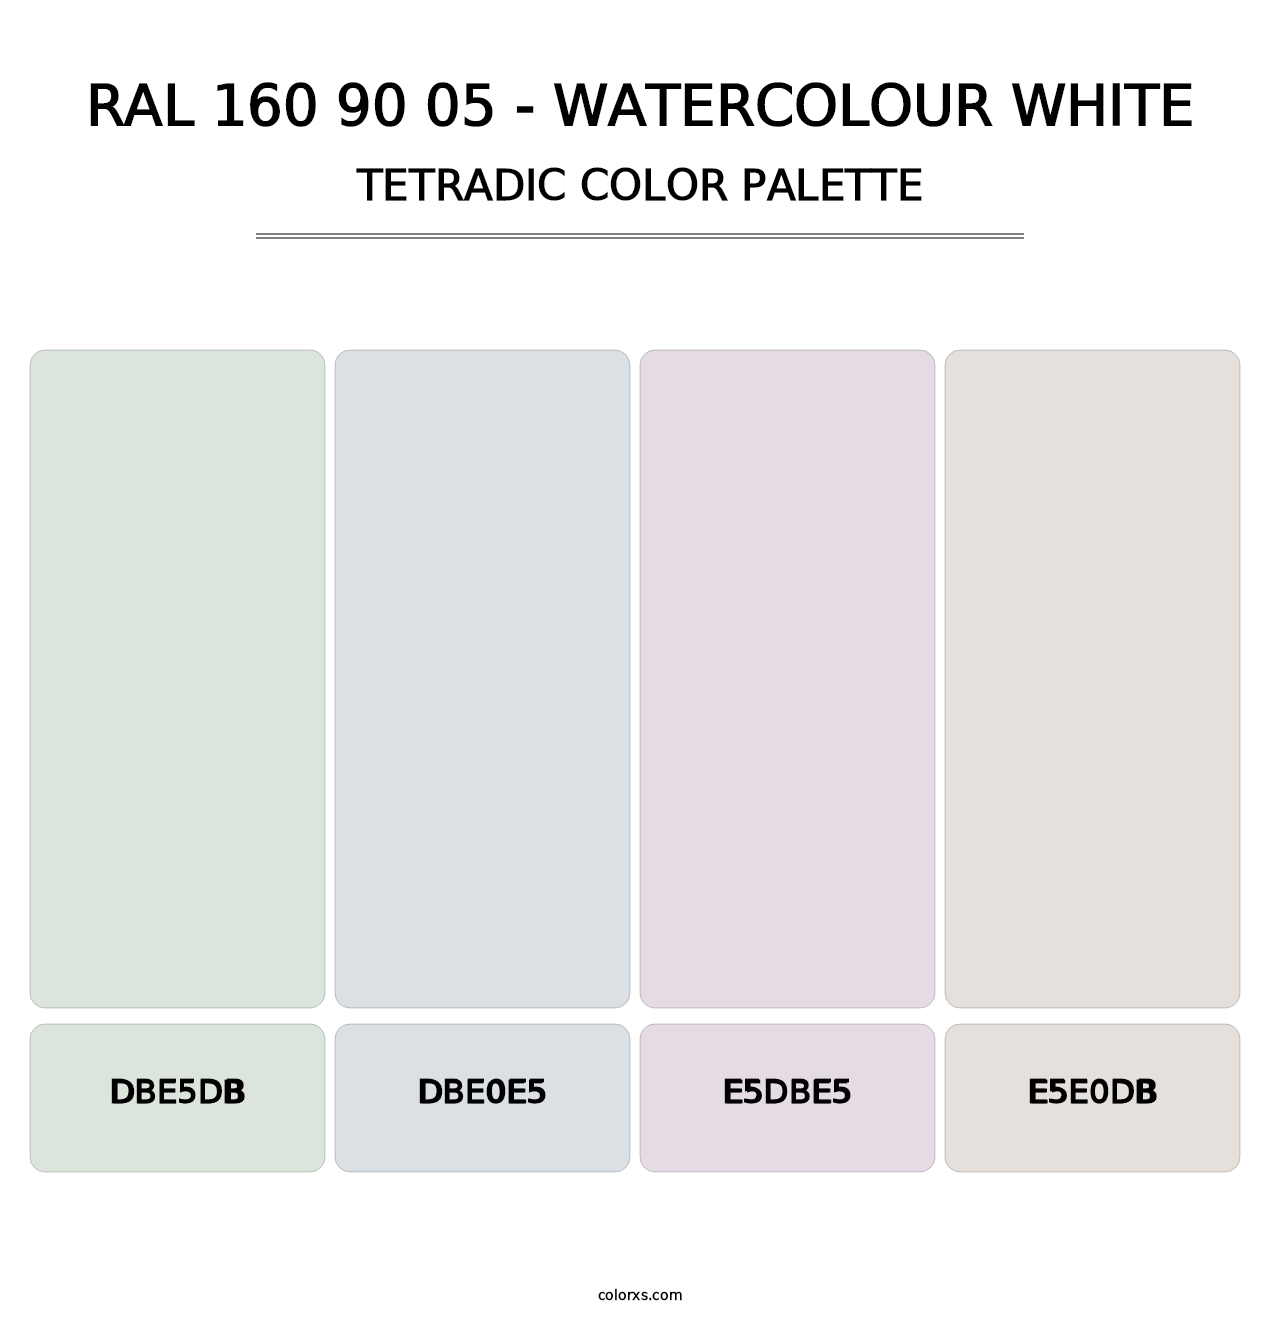 RAL 160 90 05 - Watercolour White - Tetradic Color Palette